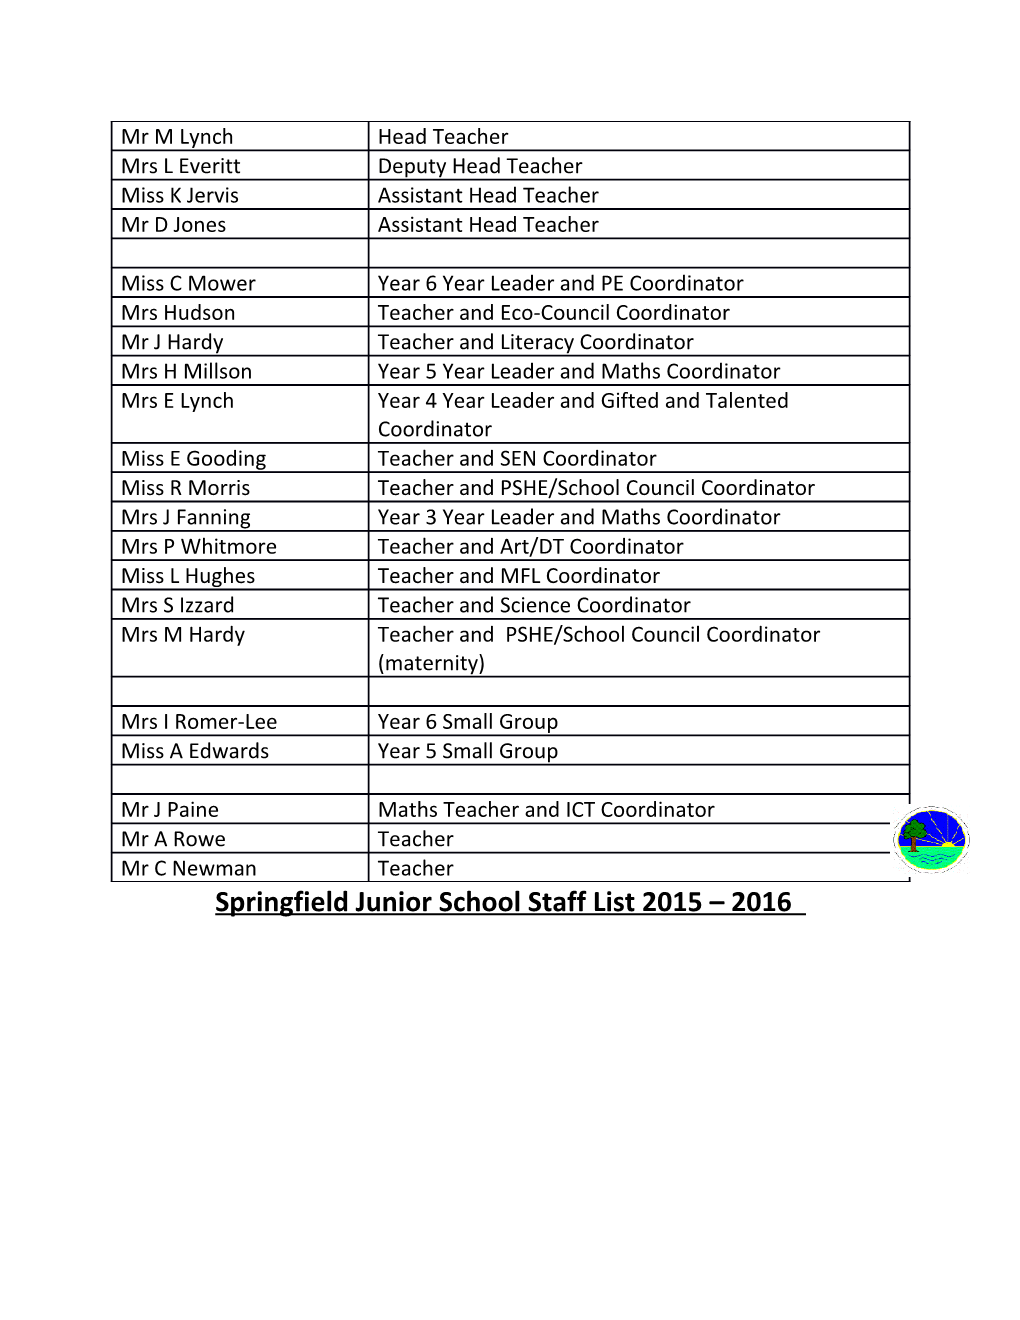 Springfield Junior School Staff List 2015 2016